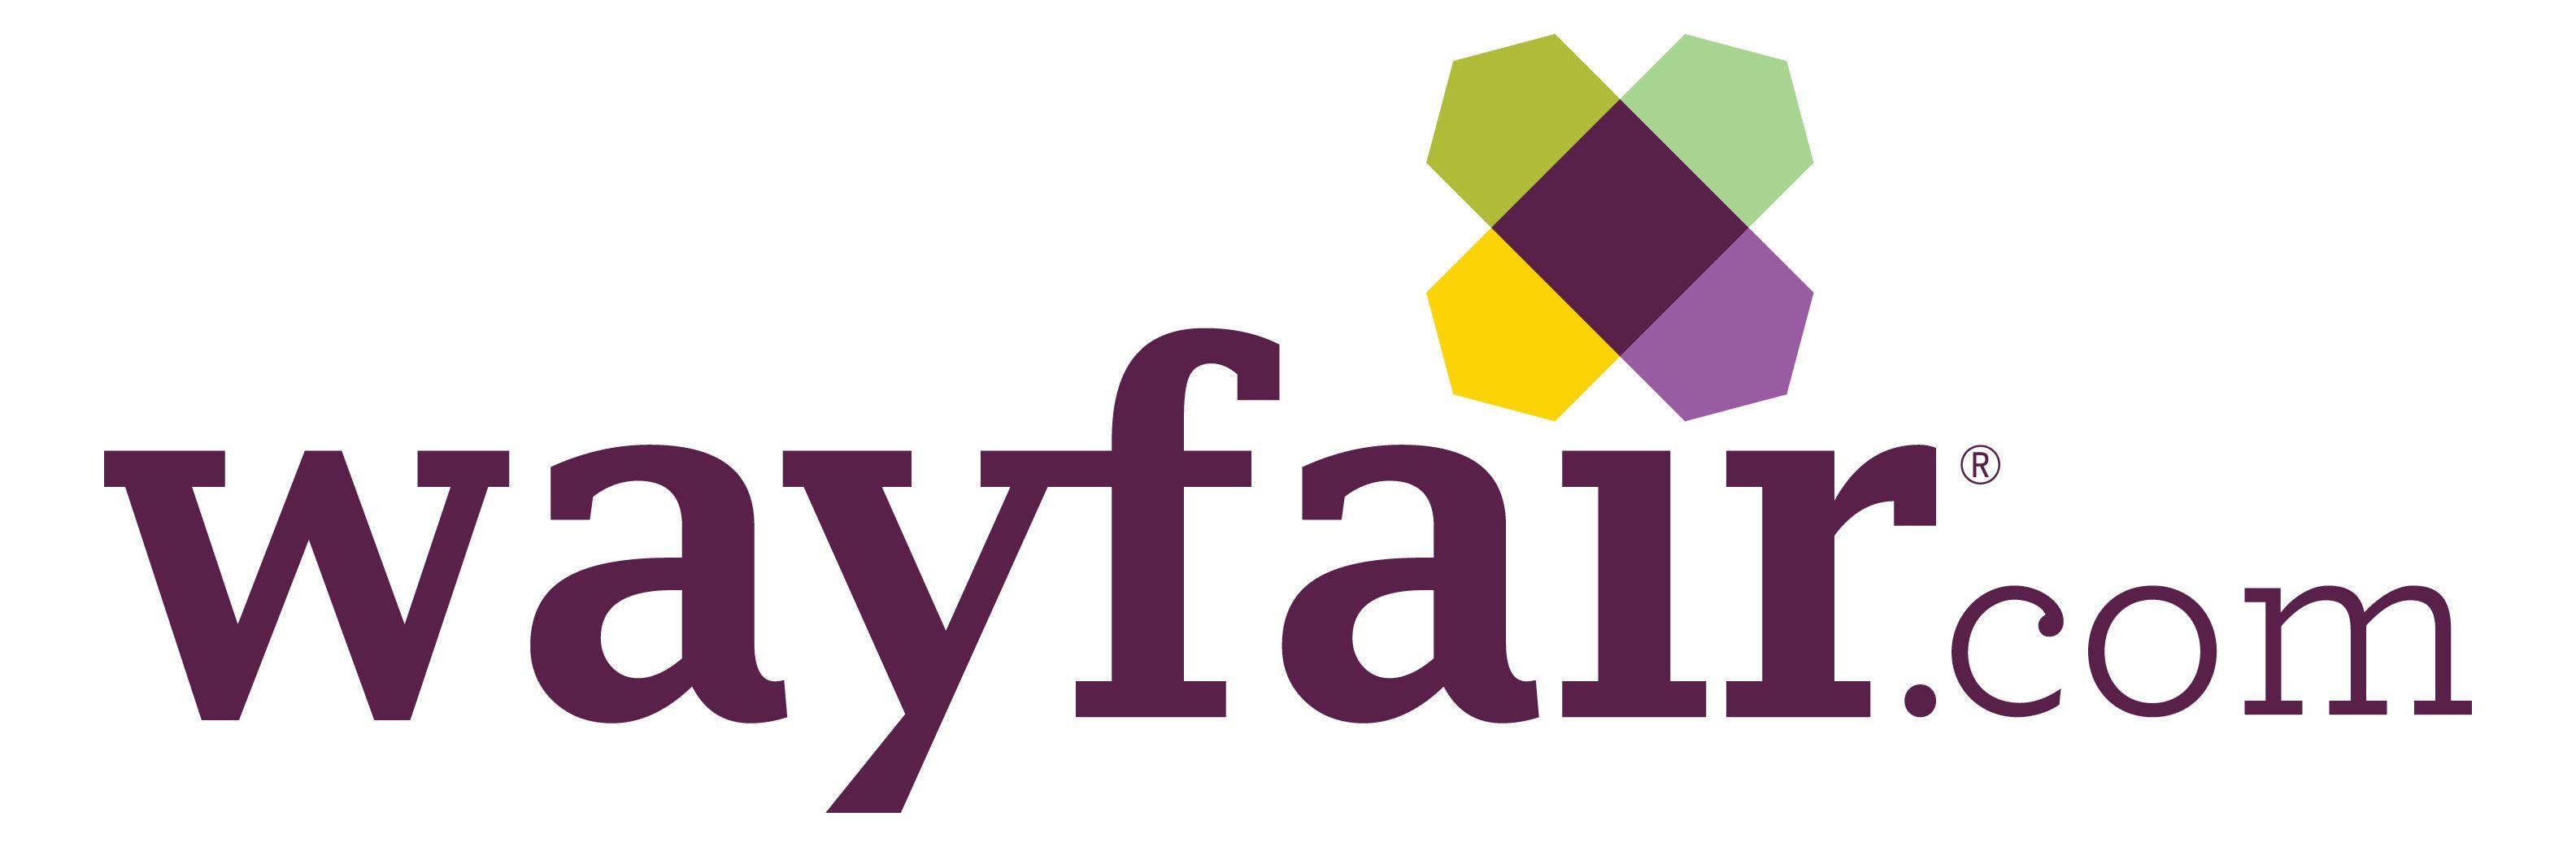 Wayfair Logo - wayfair logo - Straight Line Communications